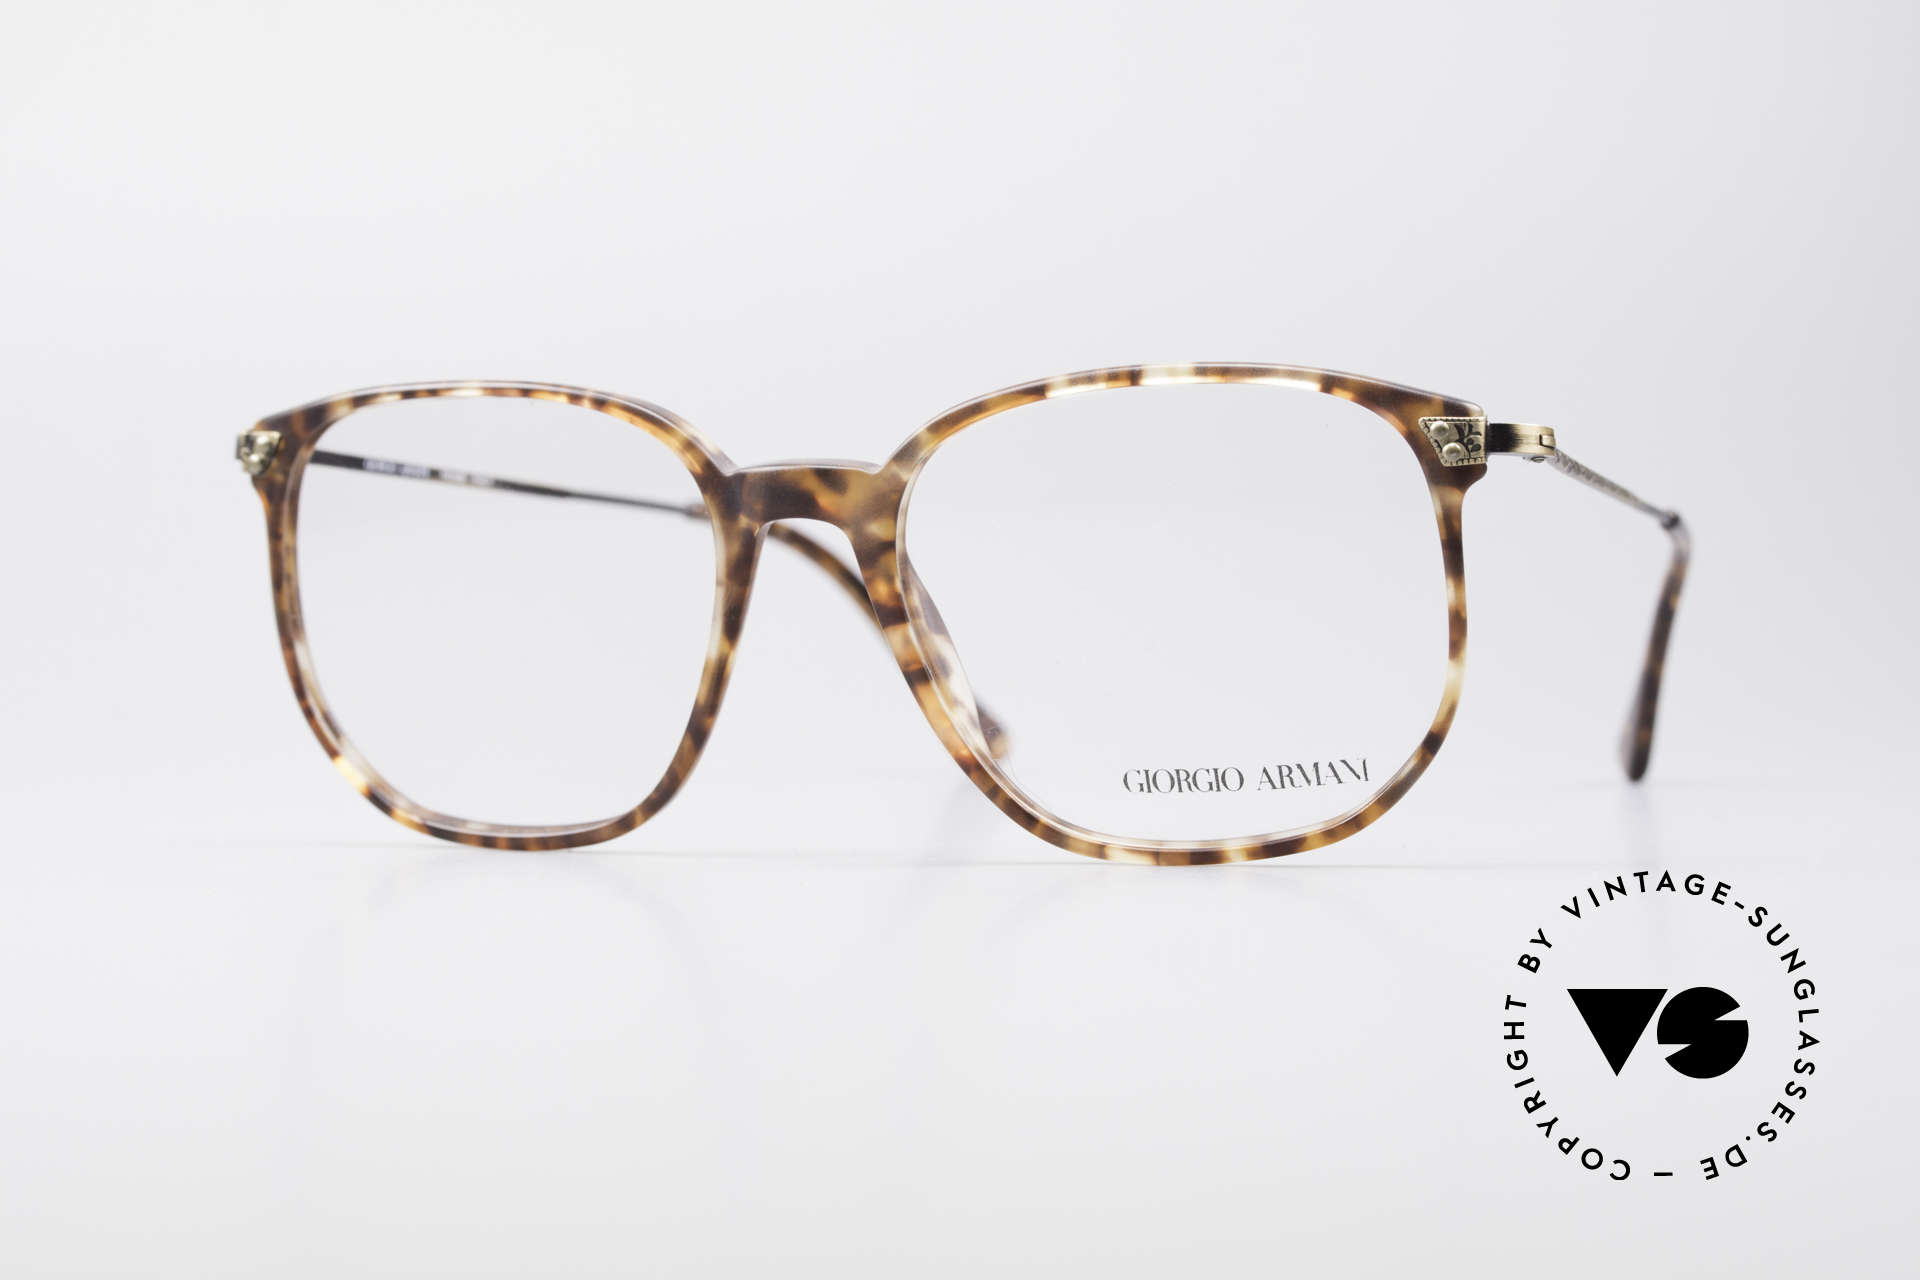 Giorgio Armani 335 True Vintage Eyeglasses, true vintage eyeglass-frame by GIORGIO ARMANI, Made for Men and Women